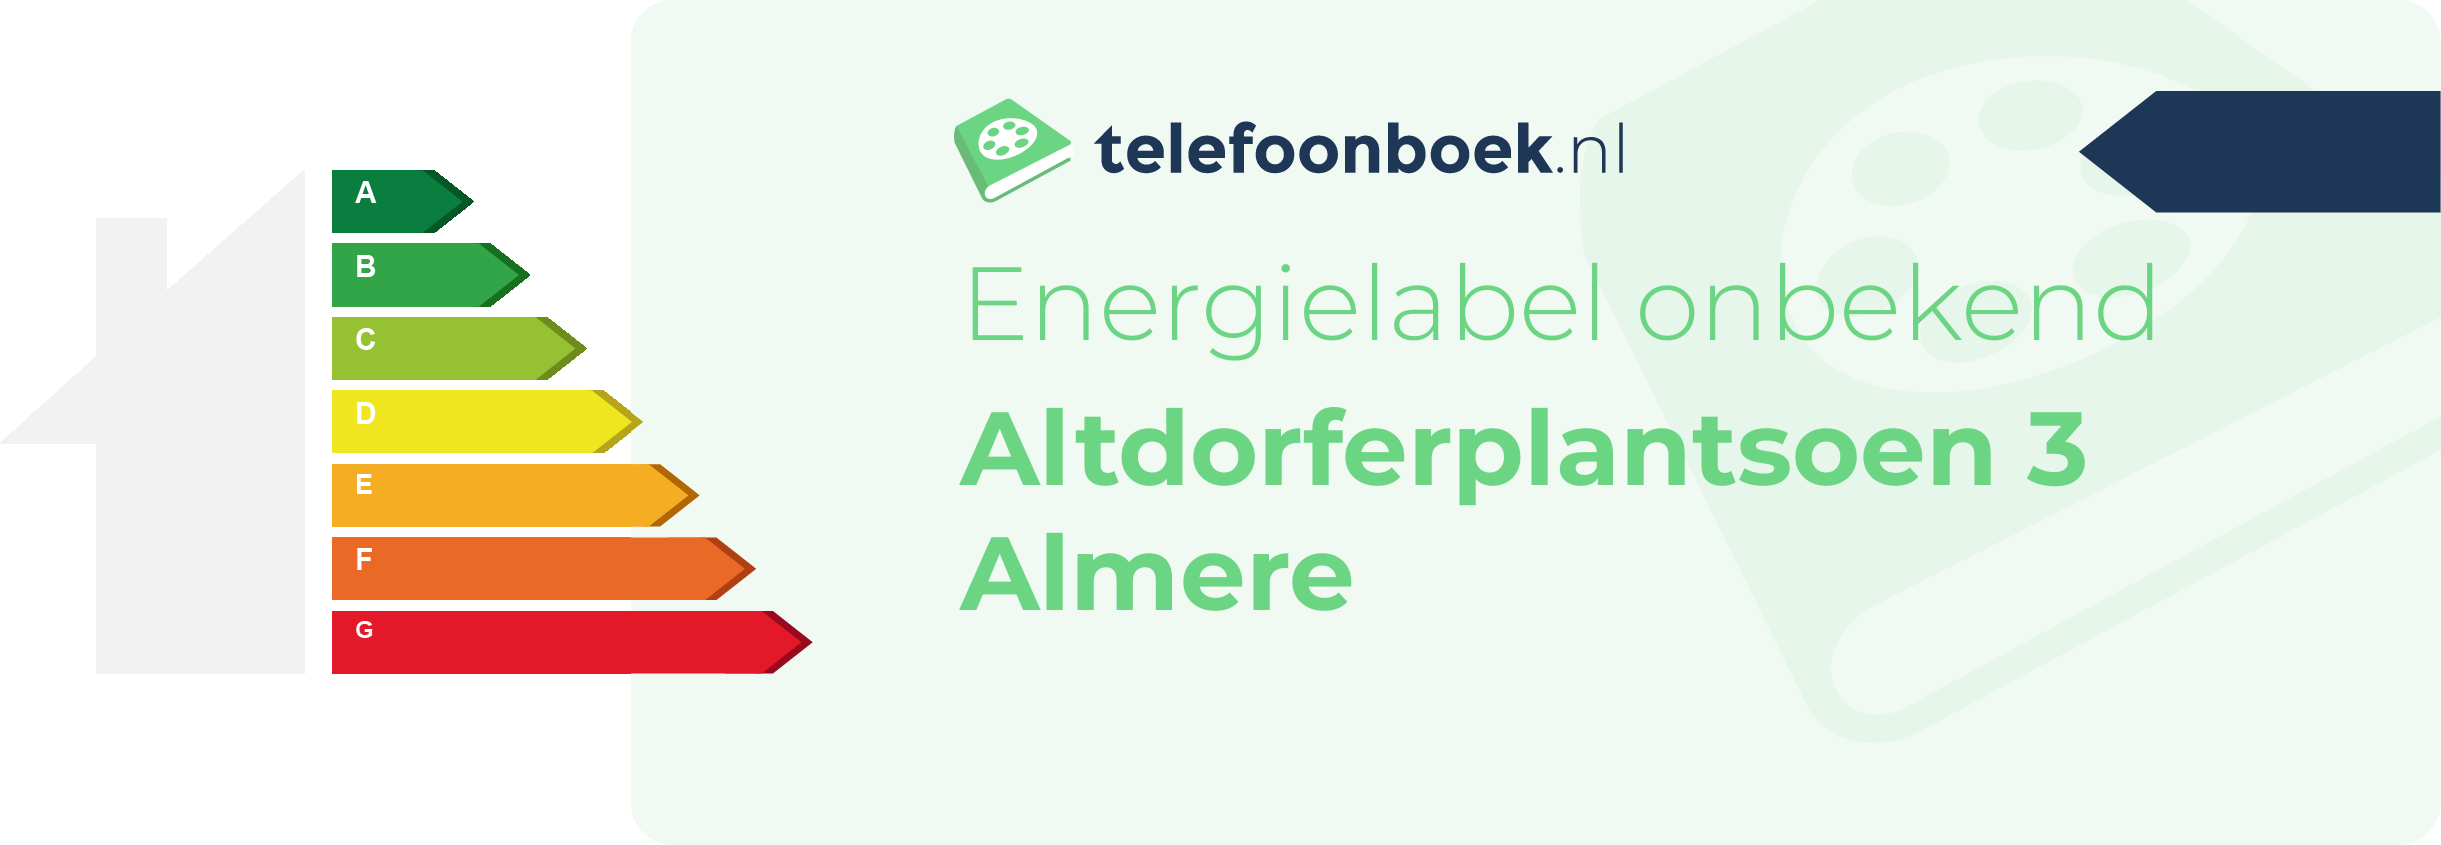 Energielabel Altdorferplantsoen 3 Almere